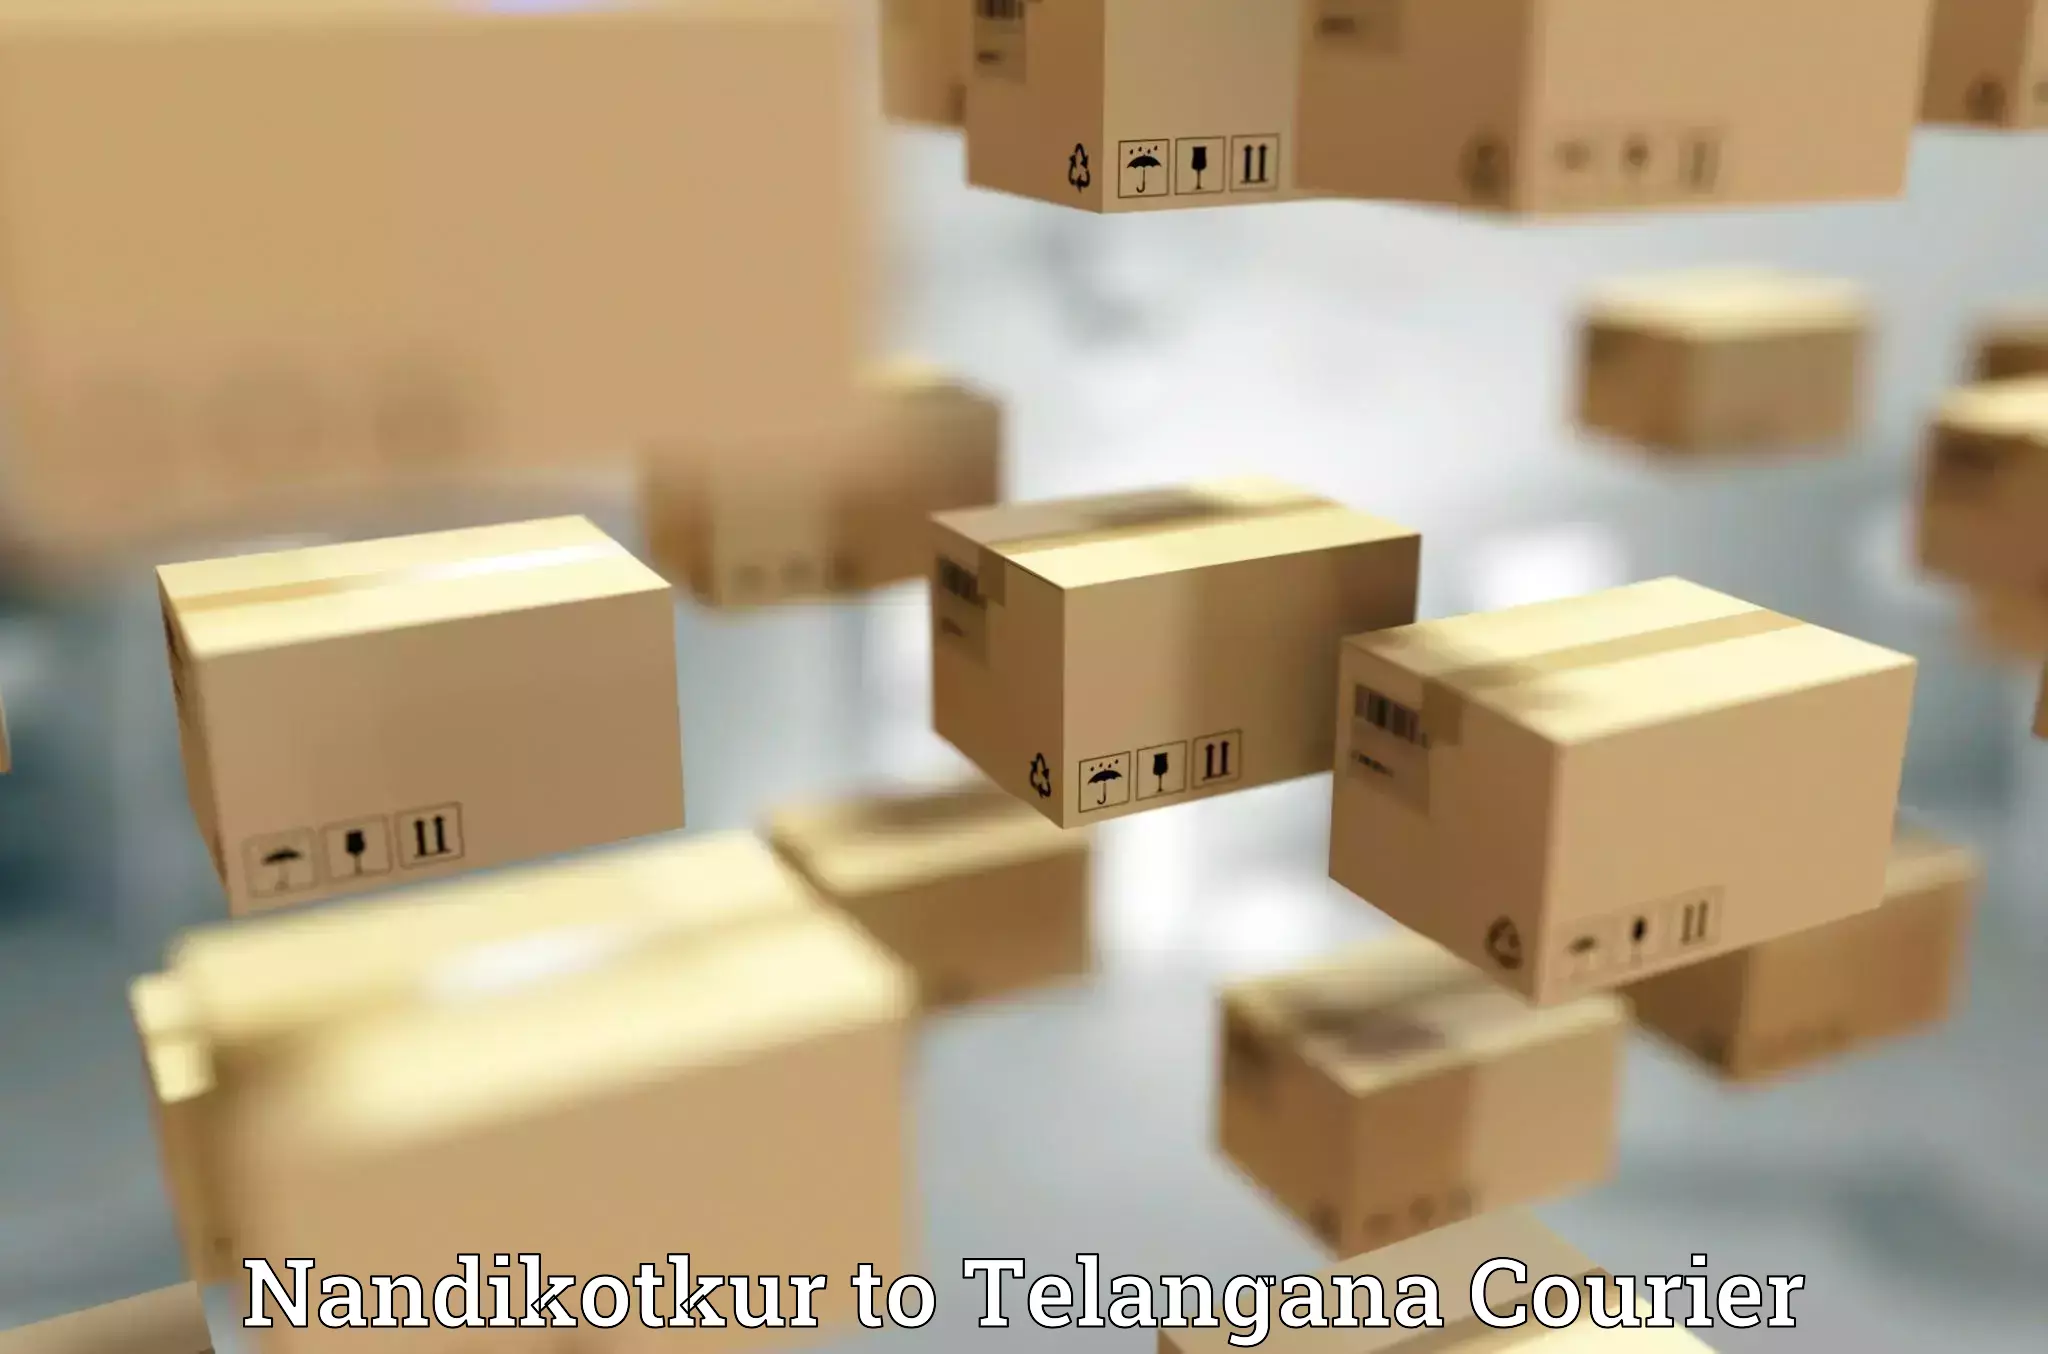 Expedited parcel delivery Nandikotkur to Telangana